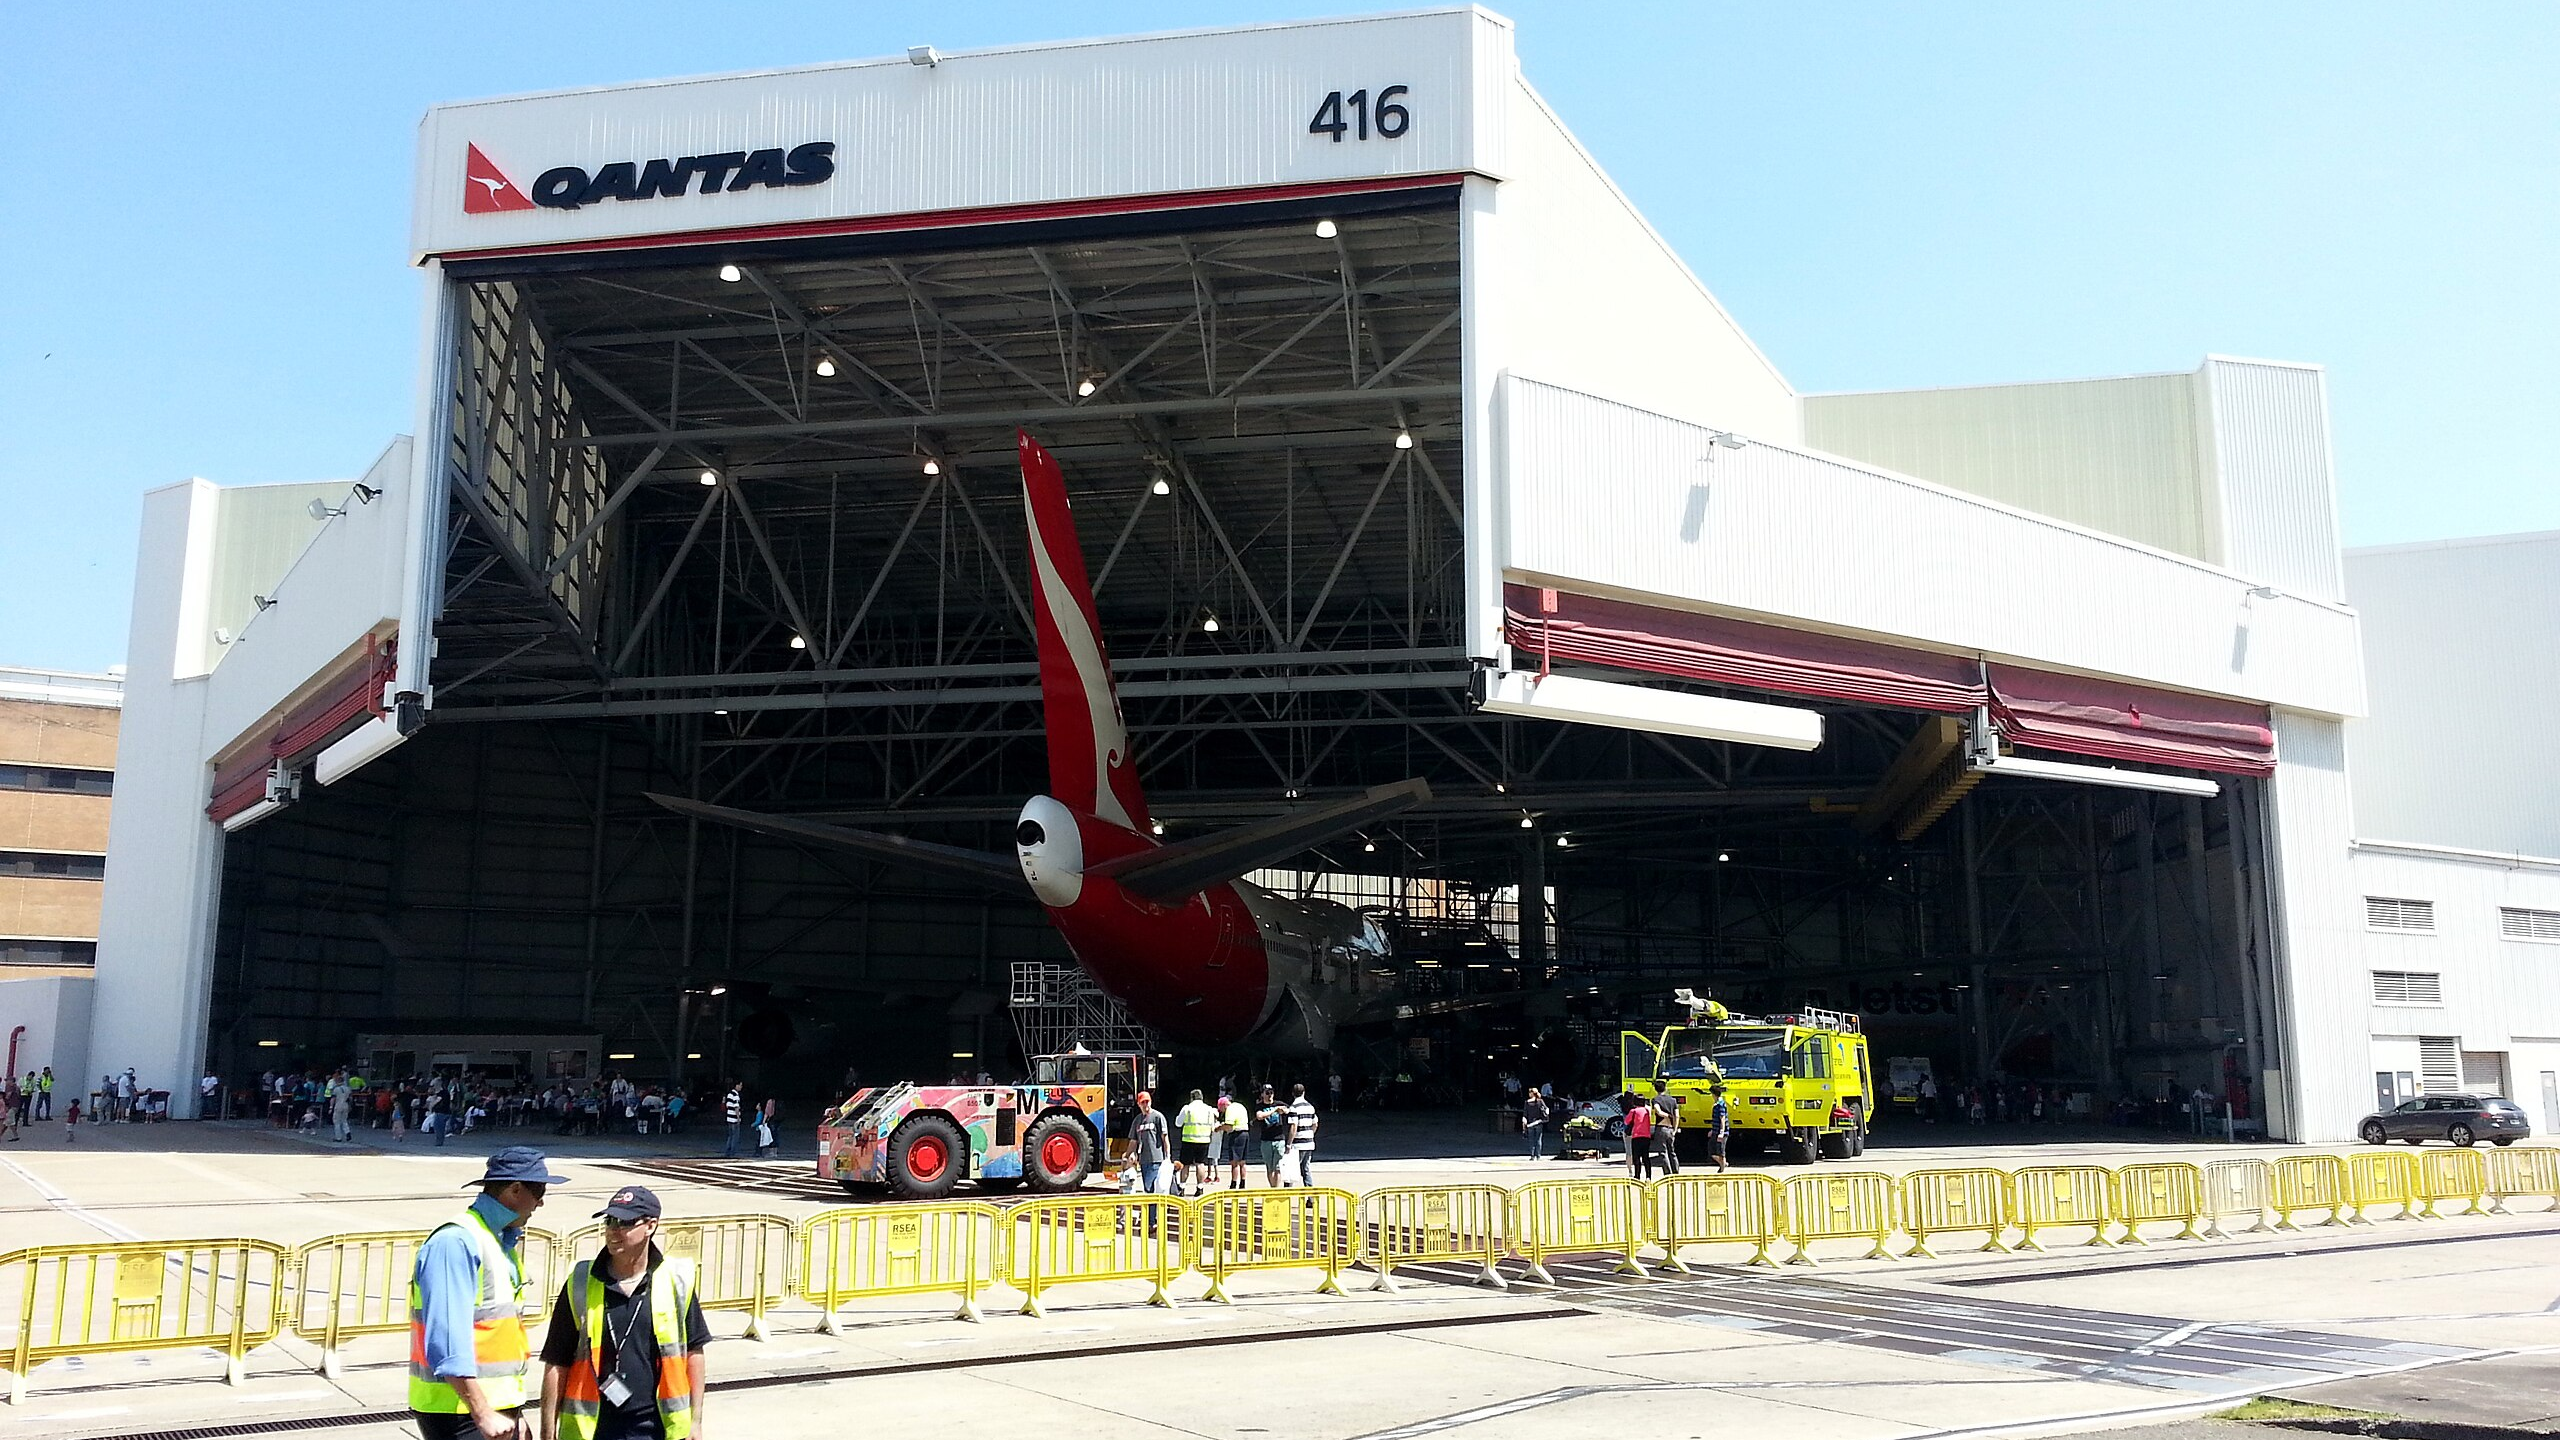 A Qantas Airport Hanger in Sydney Australia.